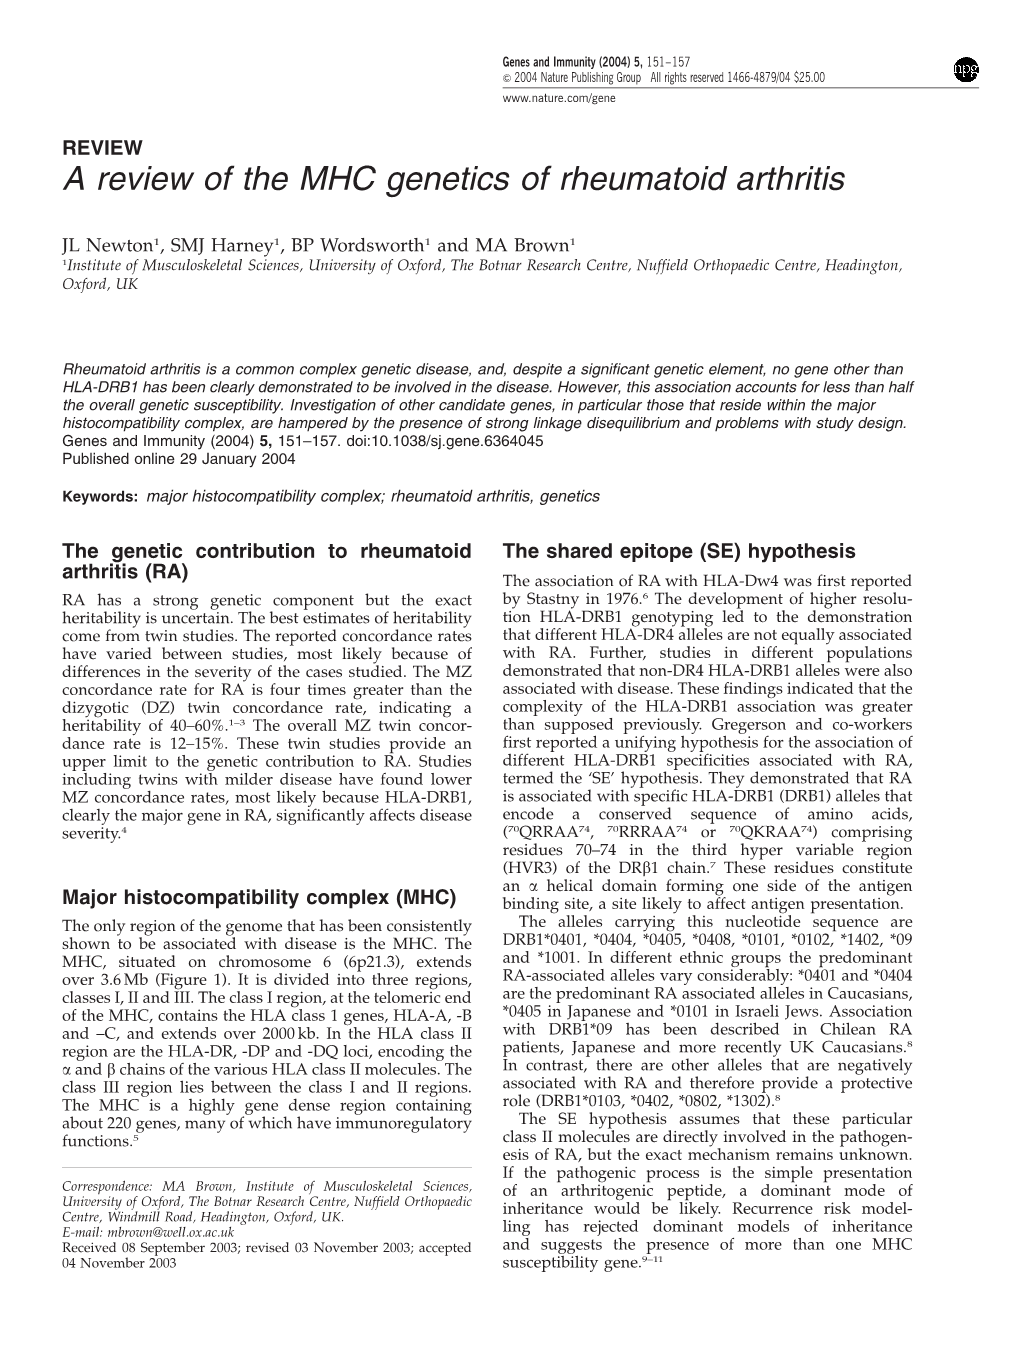 A Review of the MHC Genetics of Rheumatoid Arthritis